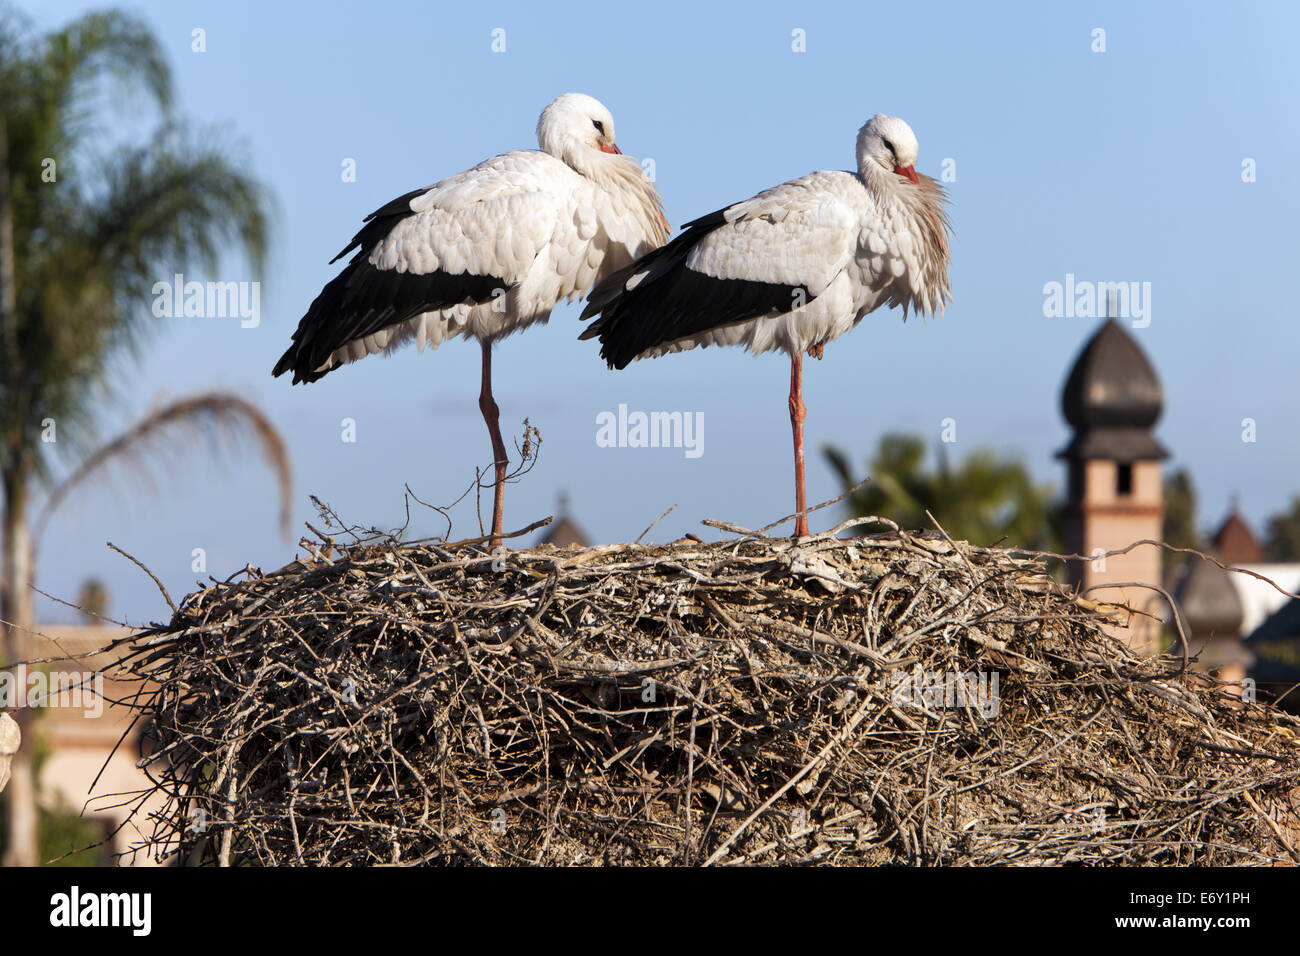 Storks perched in nest, La Sultana, Marrakech, Morocco Stock Photo